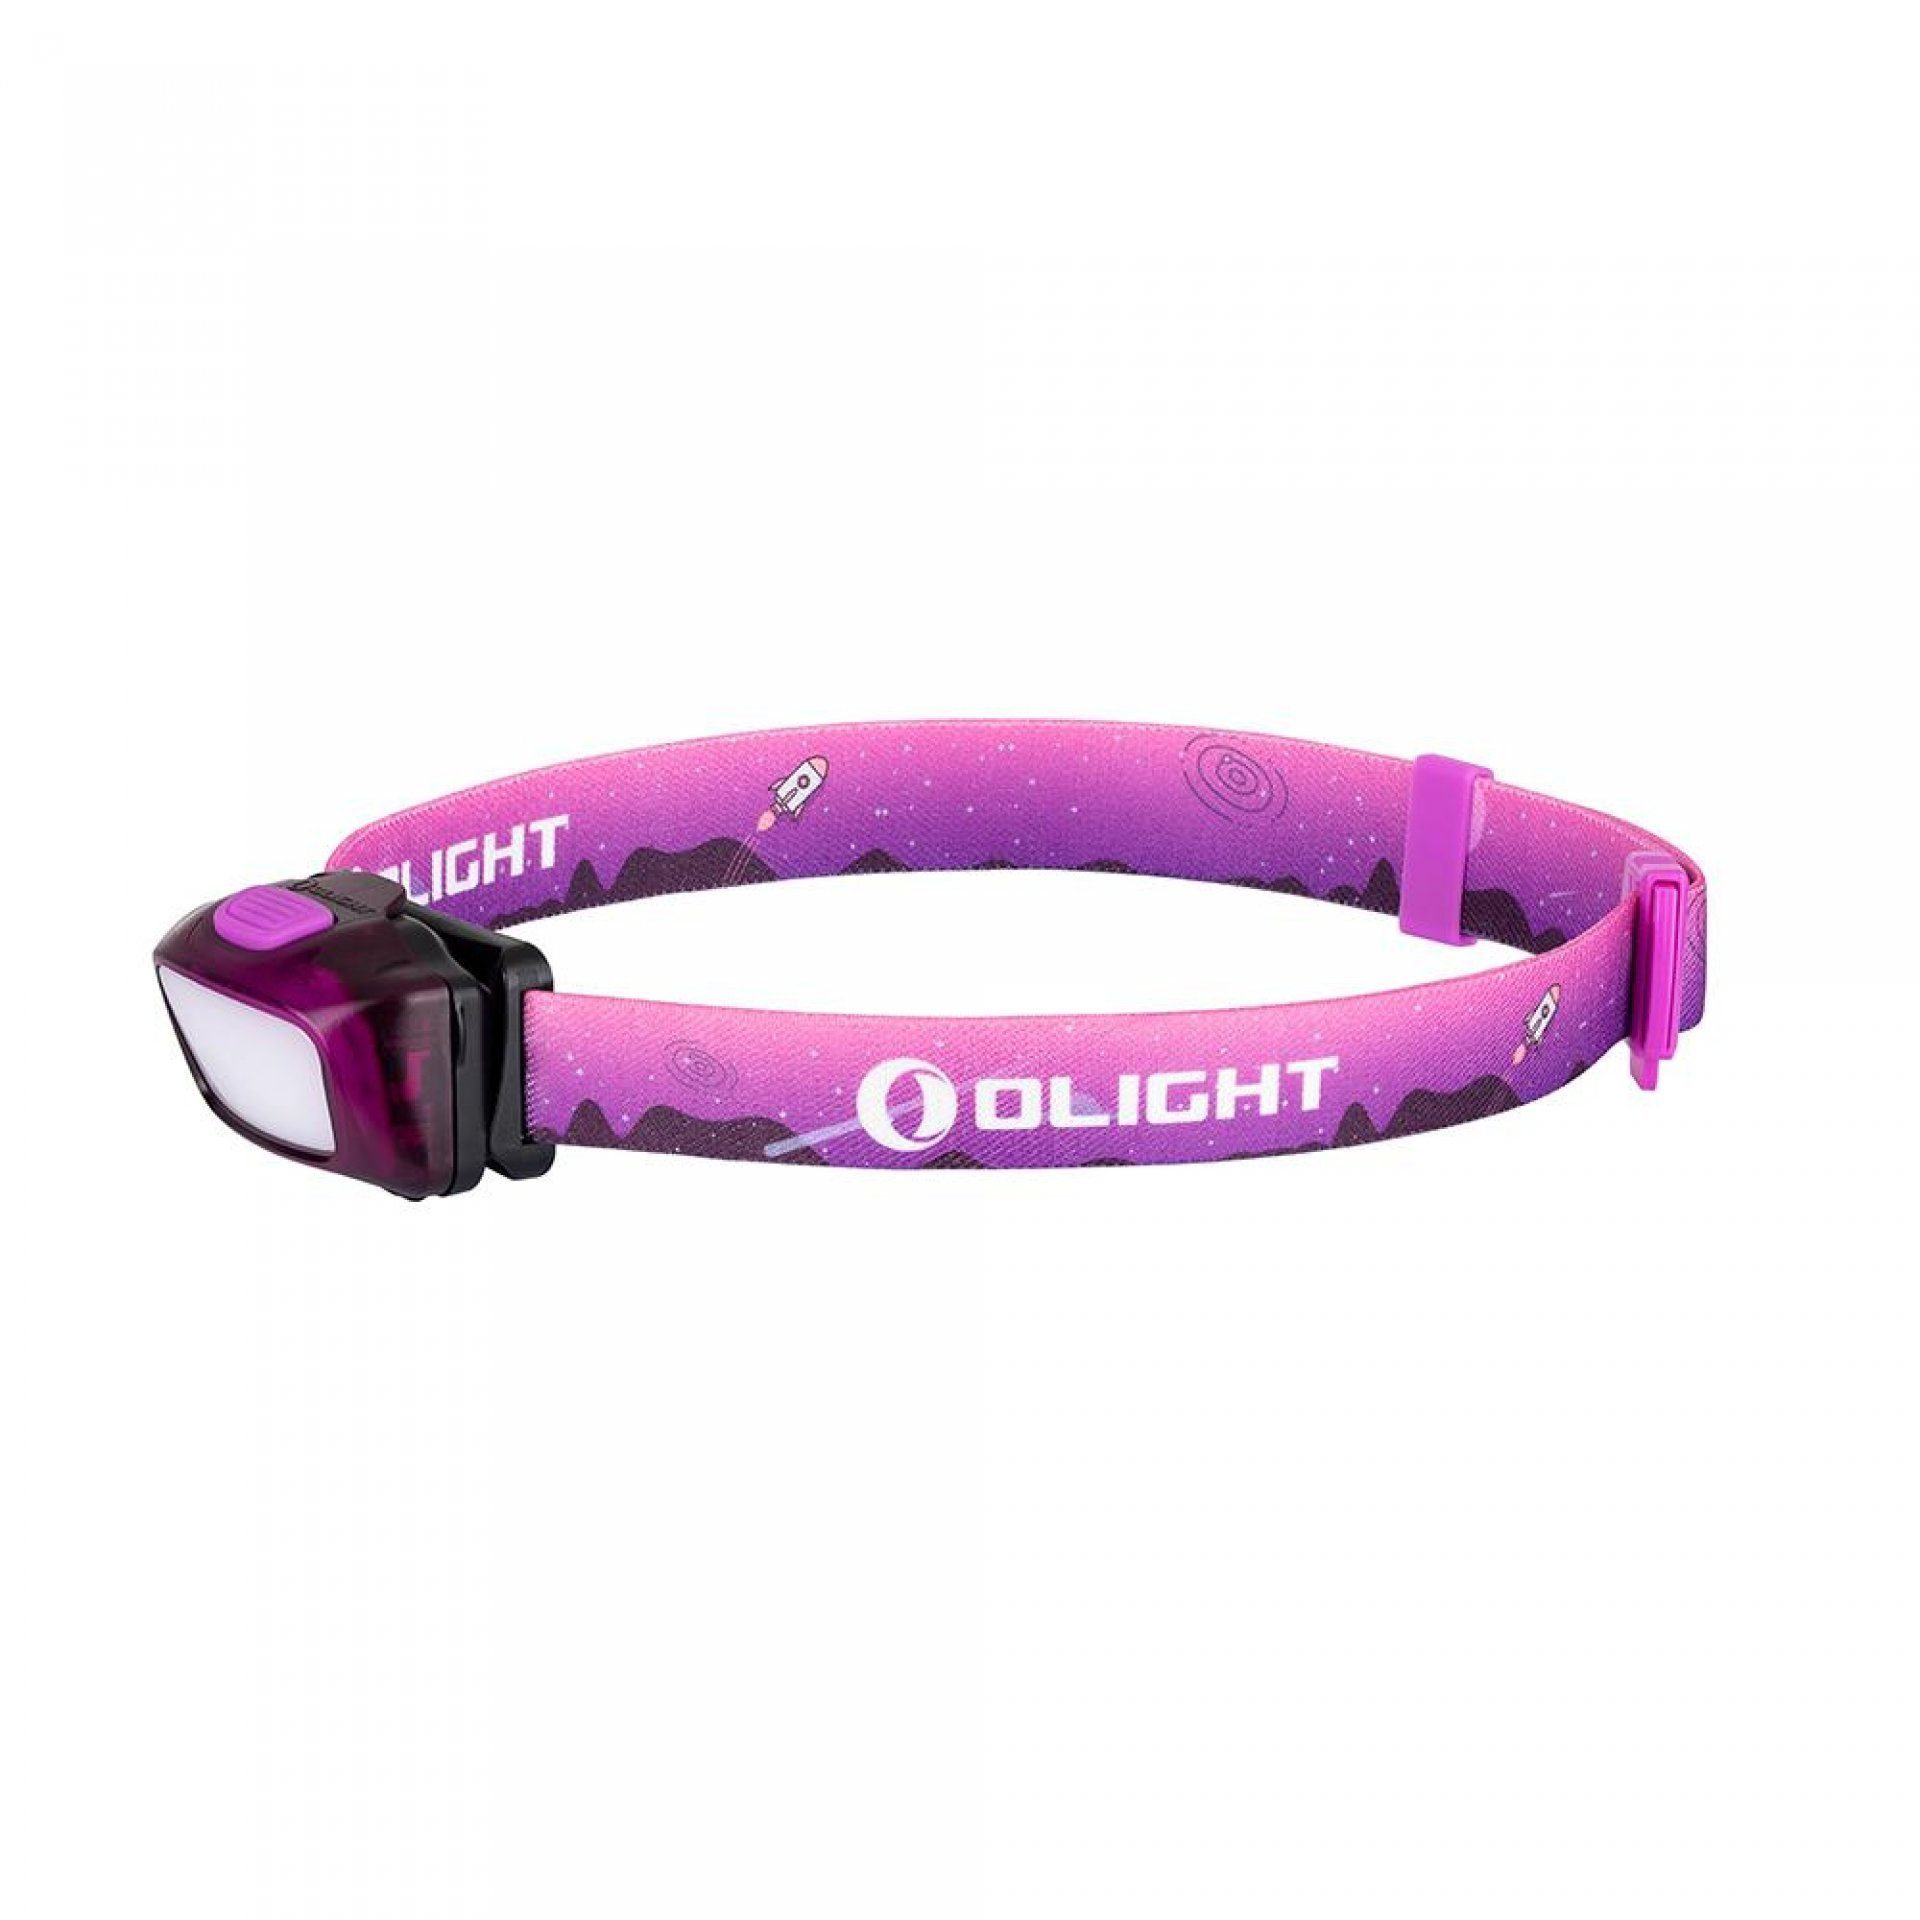 OLIGHT LED Stirnlampe H05 Lite LED-Stirnlampe, leichte Stirnlampe mit 5 Modi | Stirnlampen